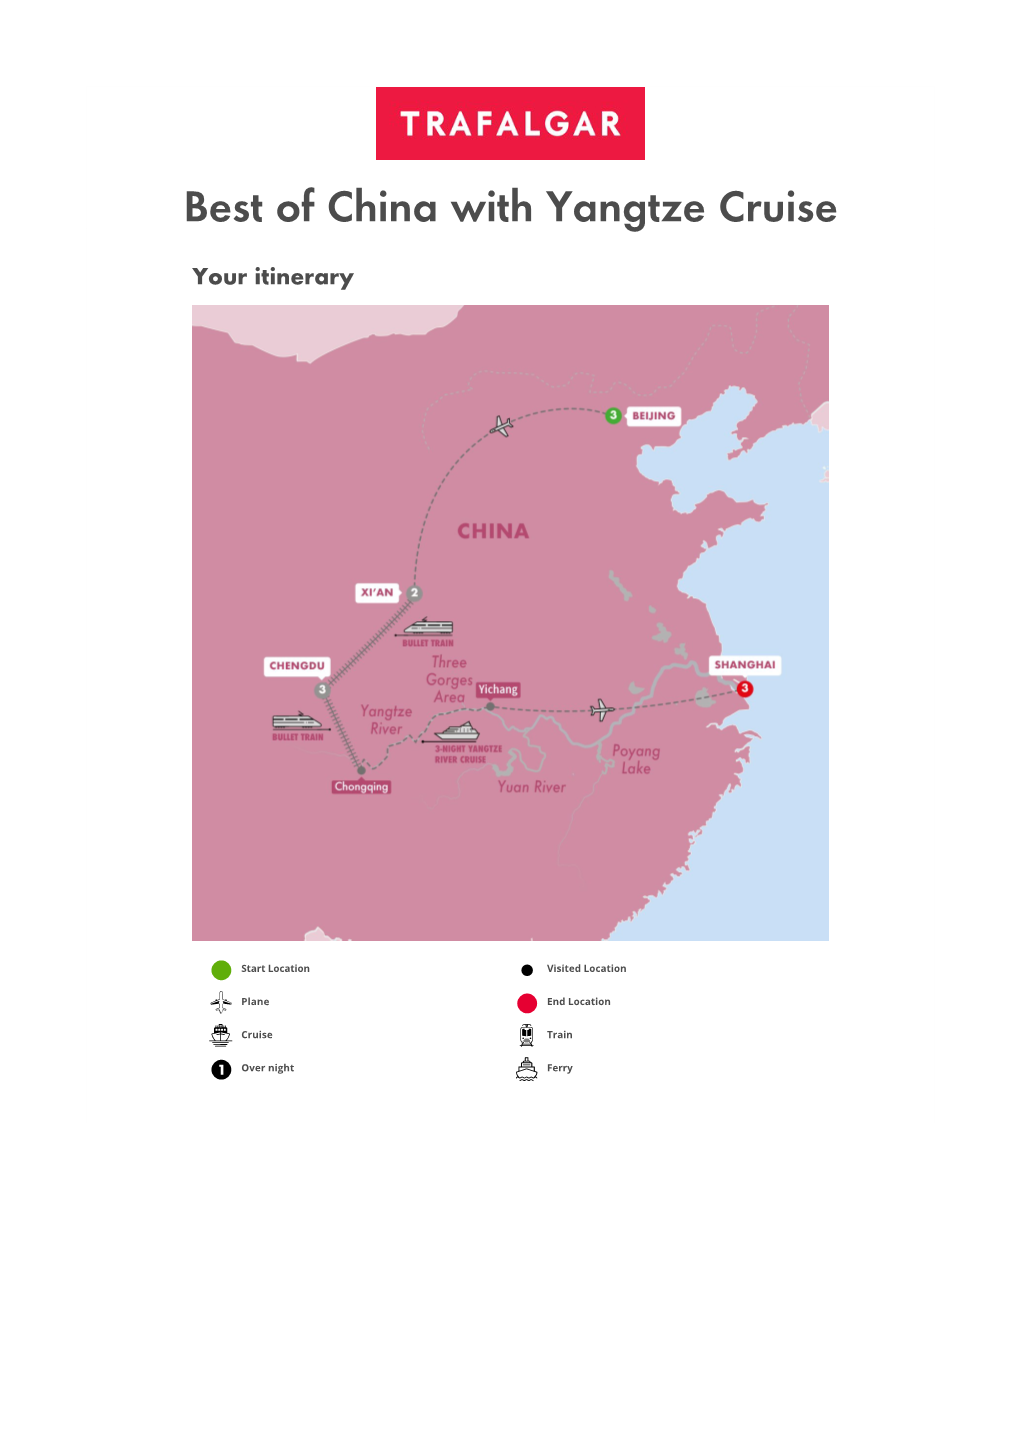 Best of China with Yangtze Cruise